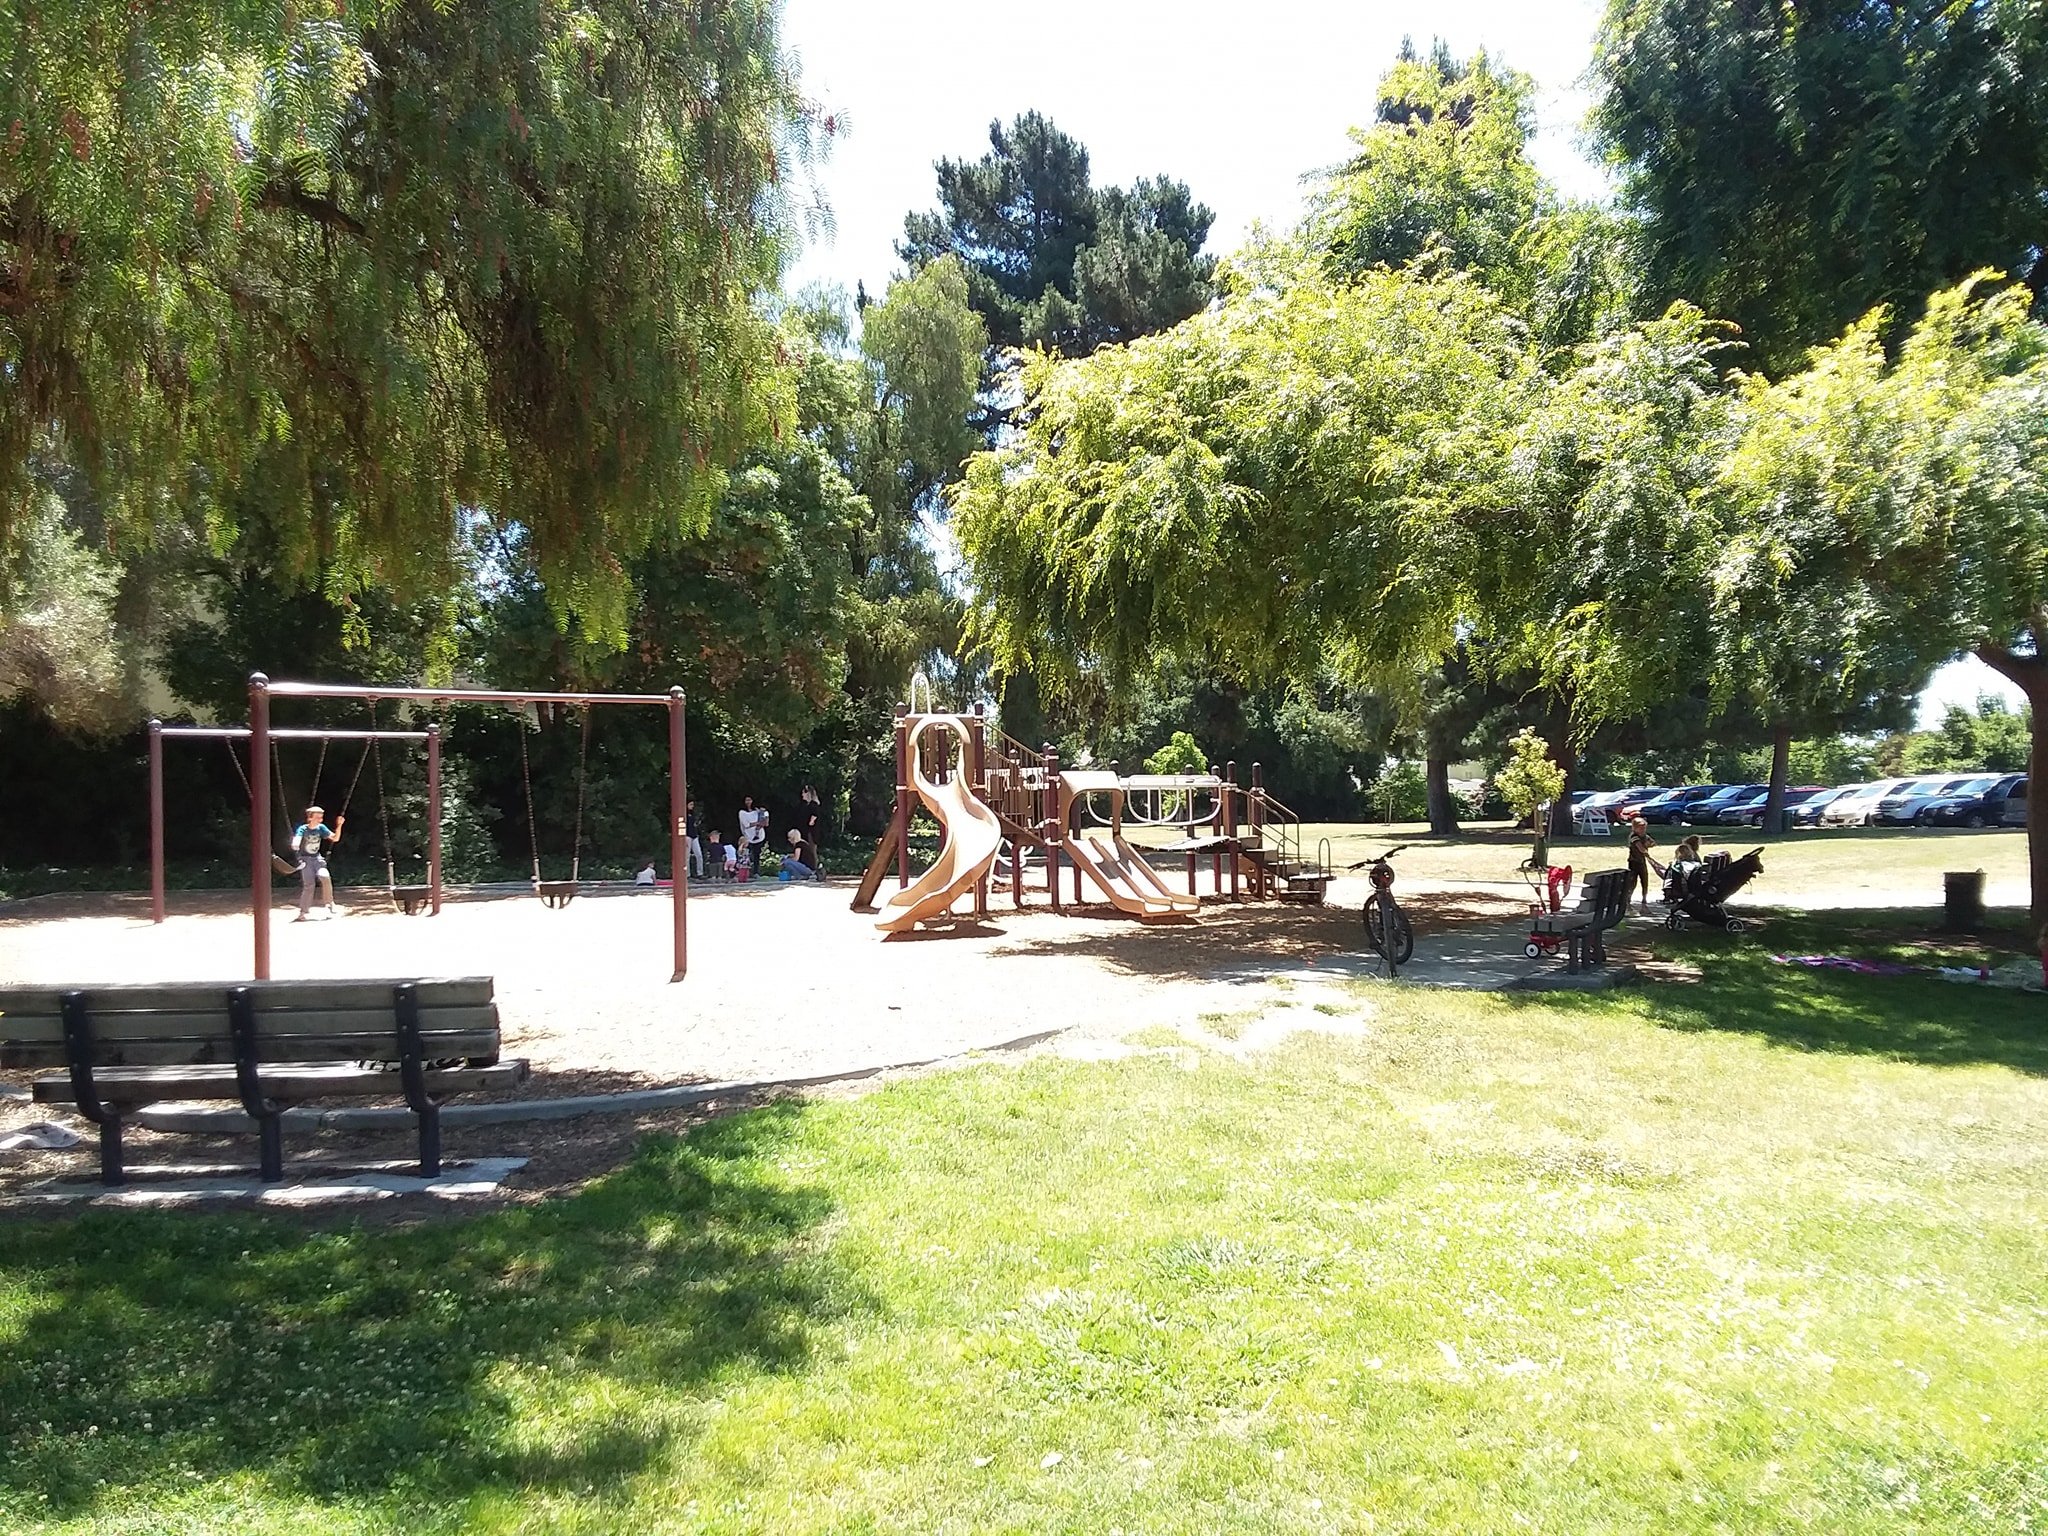 Niles Community Park in Fremont